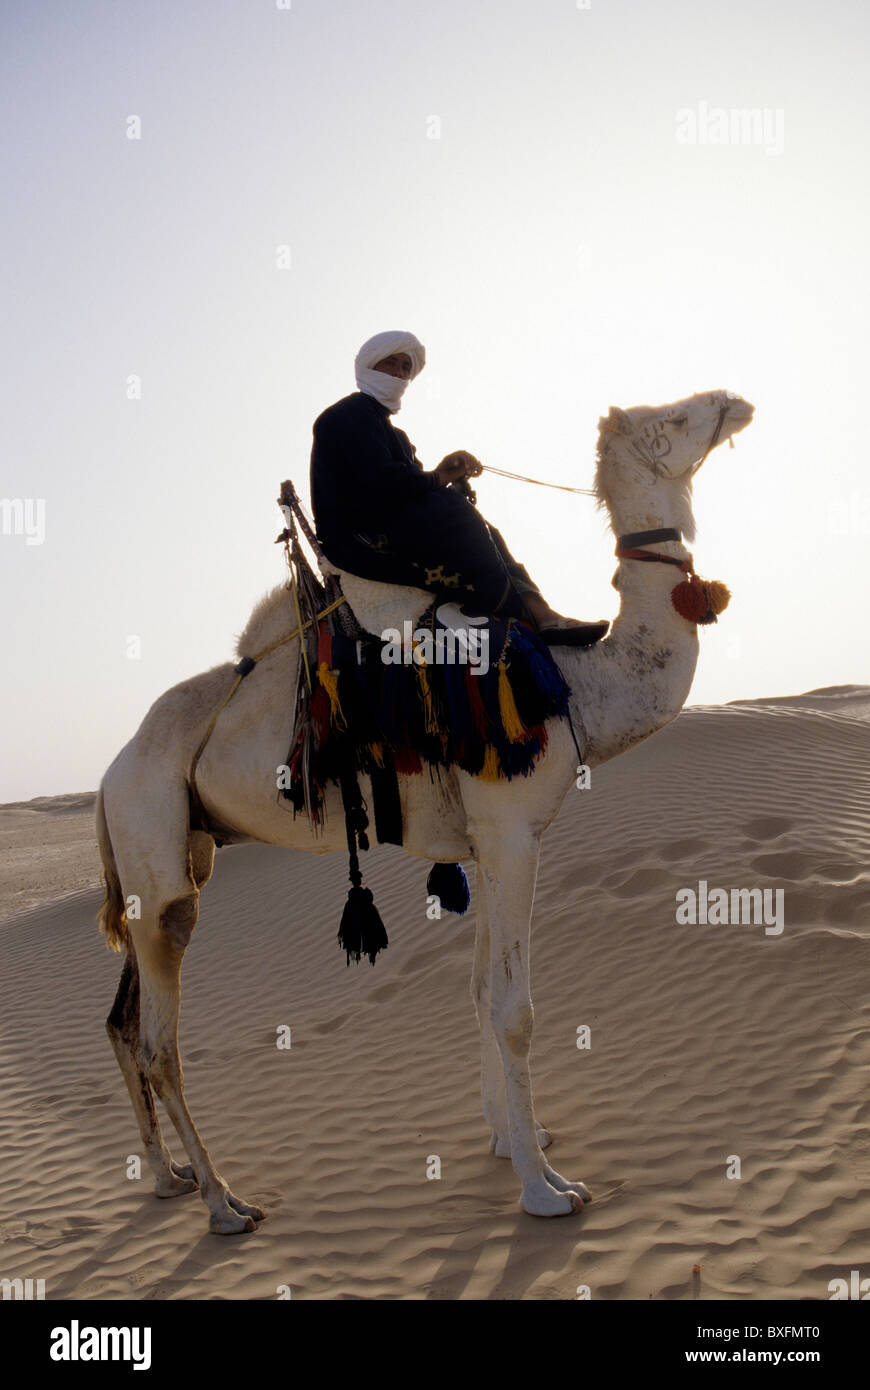 Tunisian man atop horse in the Saharan desert oasis town of Tozeur- Tunisia. Stock Photo